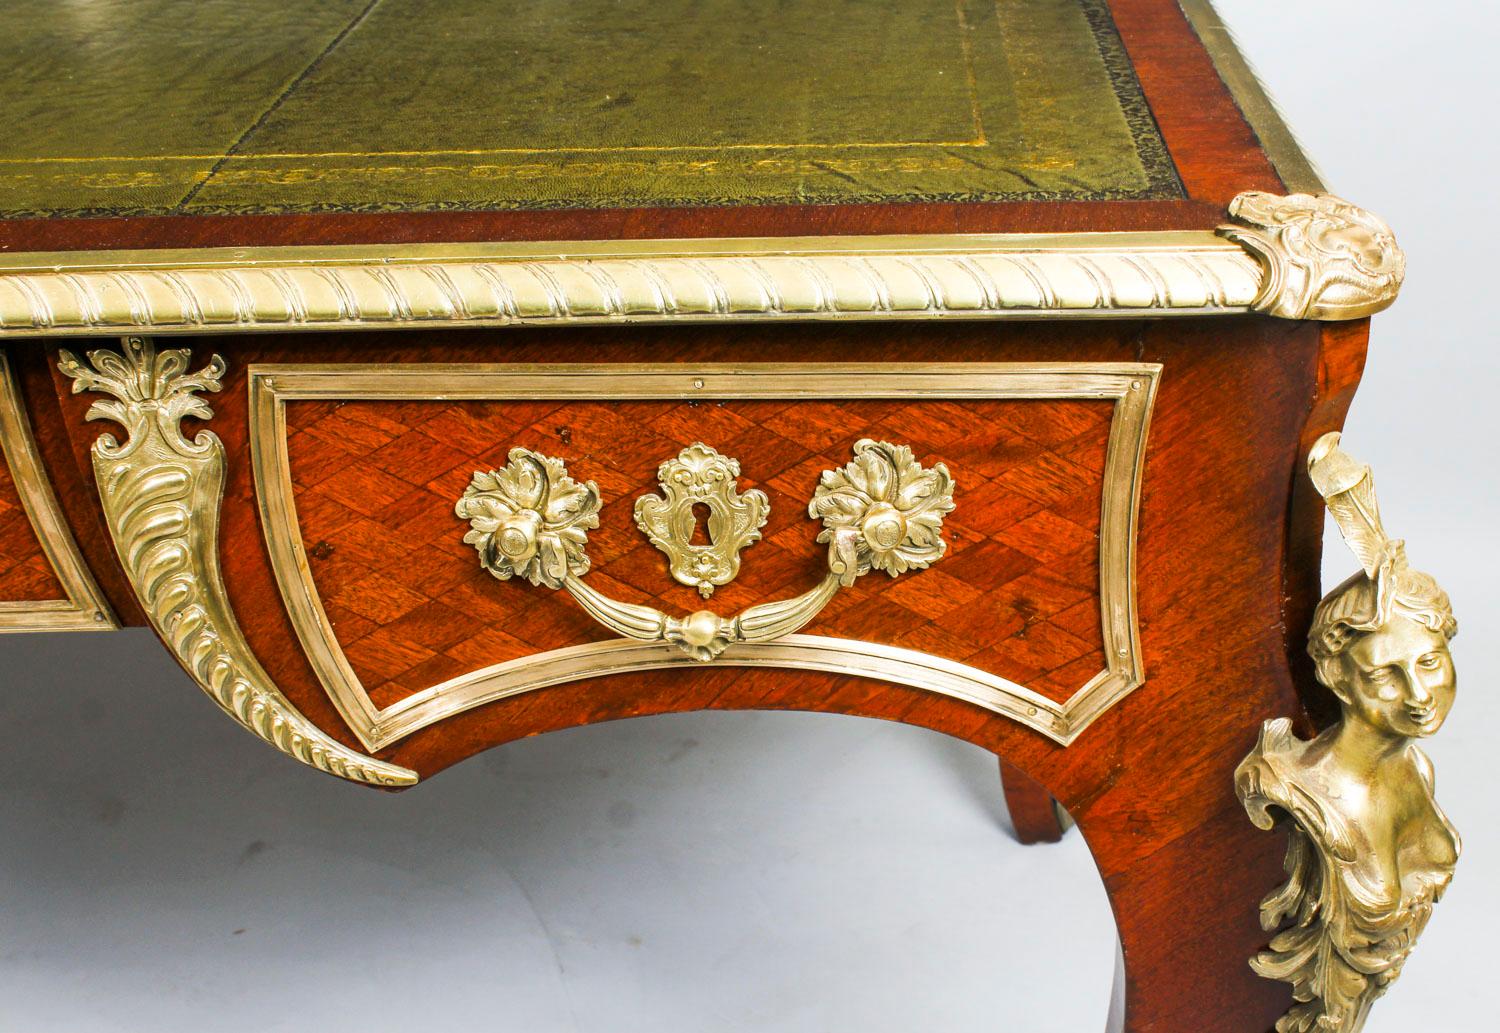 Antique French Ormolu-Mounted Parquetry Bureau Plat Desk 19th Century 14